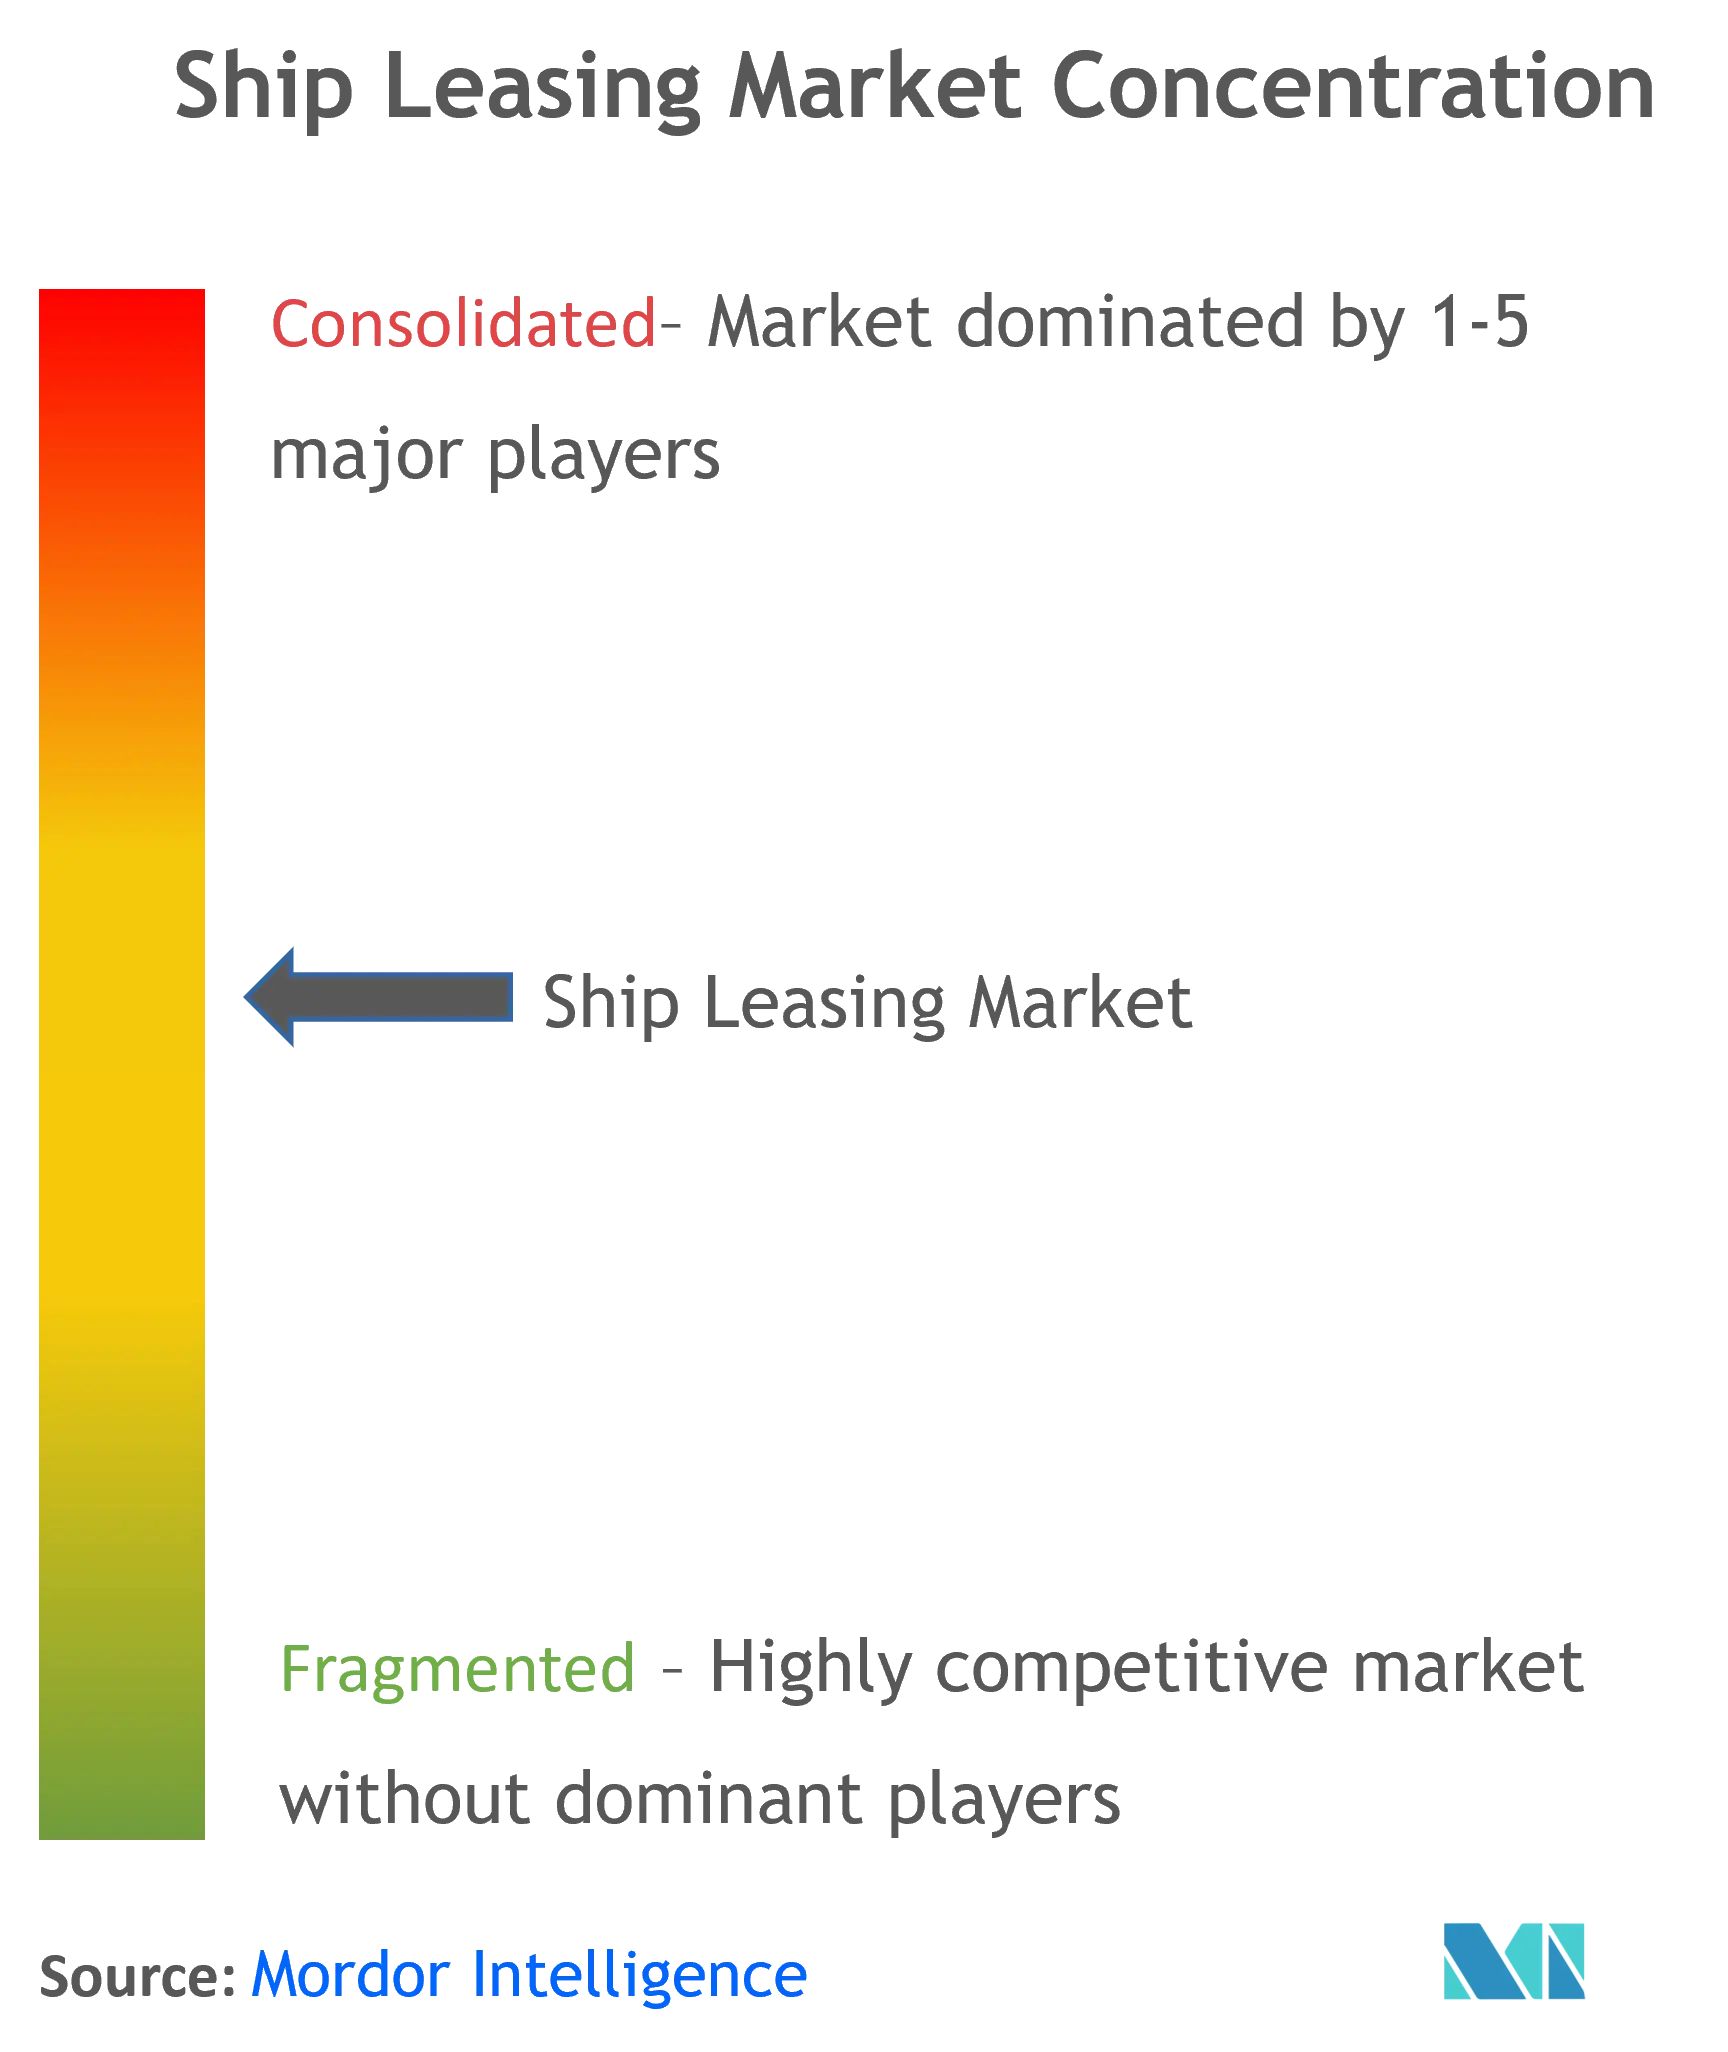 Ship Leasing Market Concentration